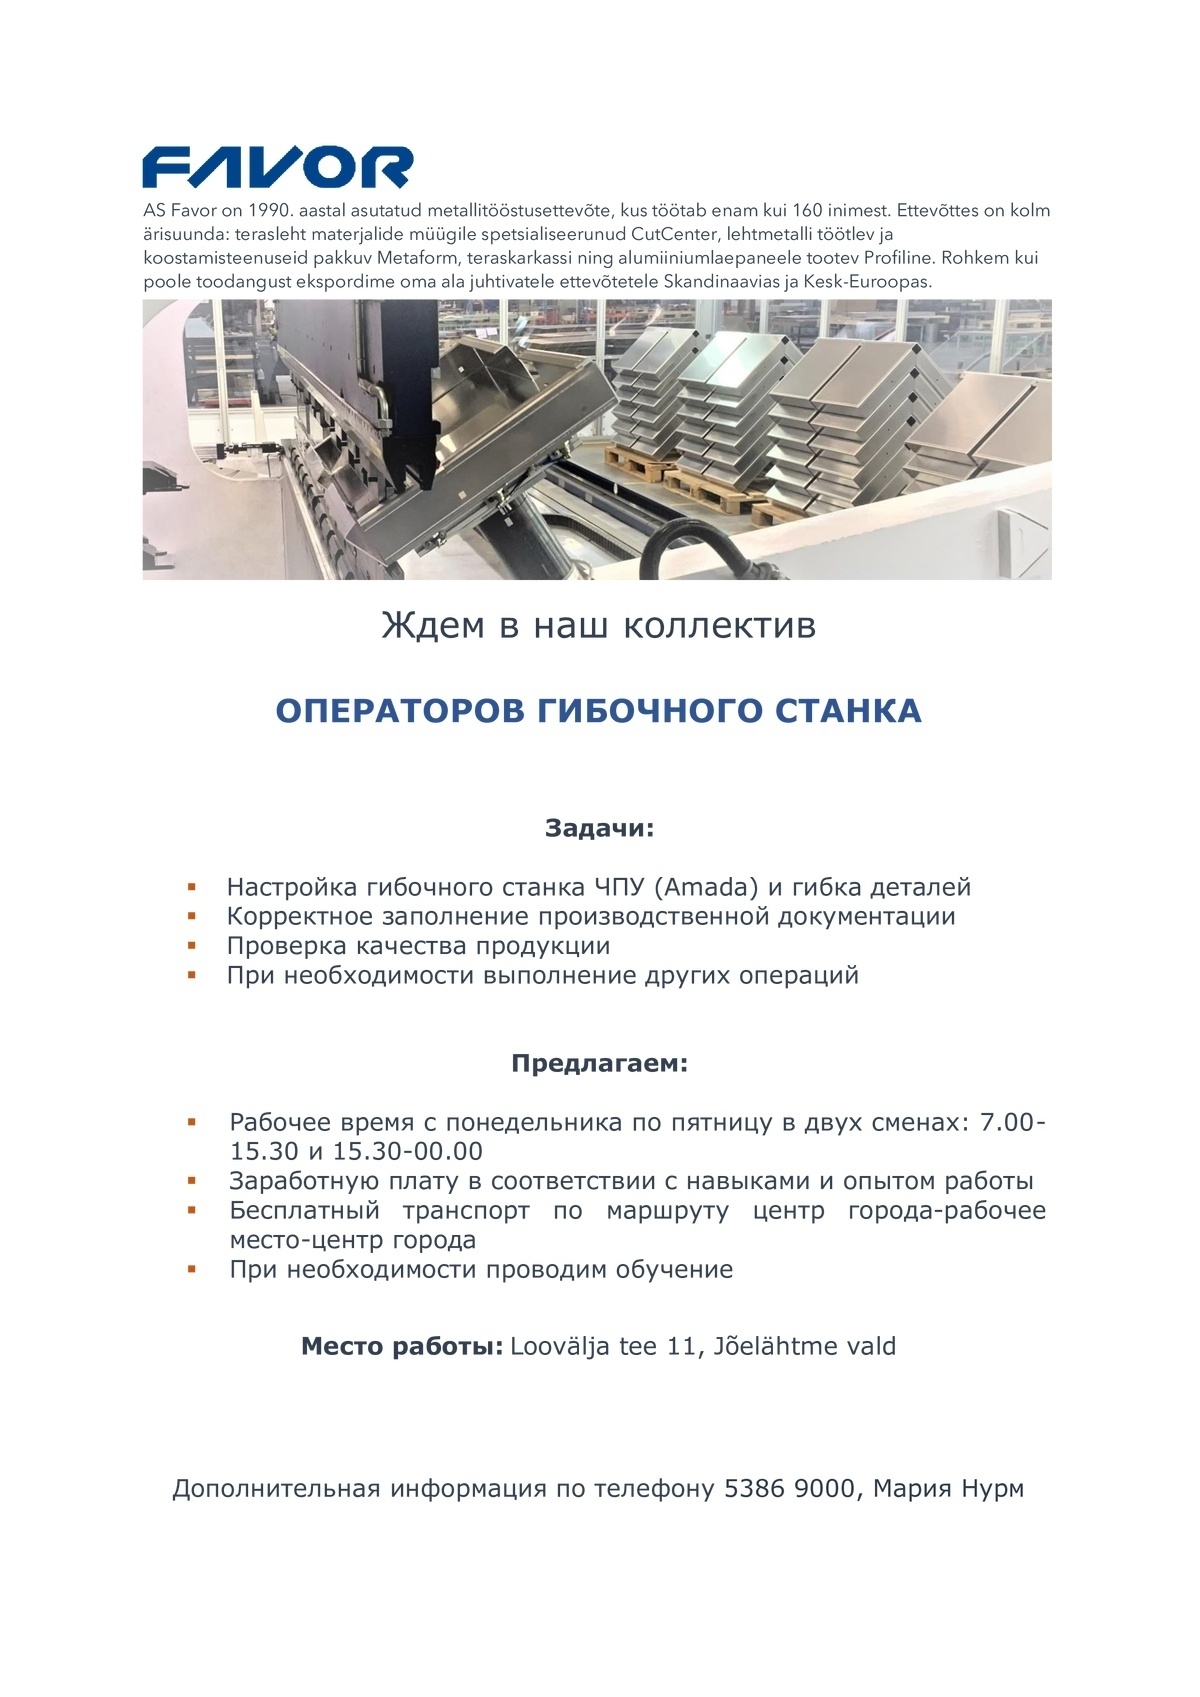 Favor AS CNC operaator/Oператор гибочного станка (CNC)